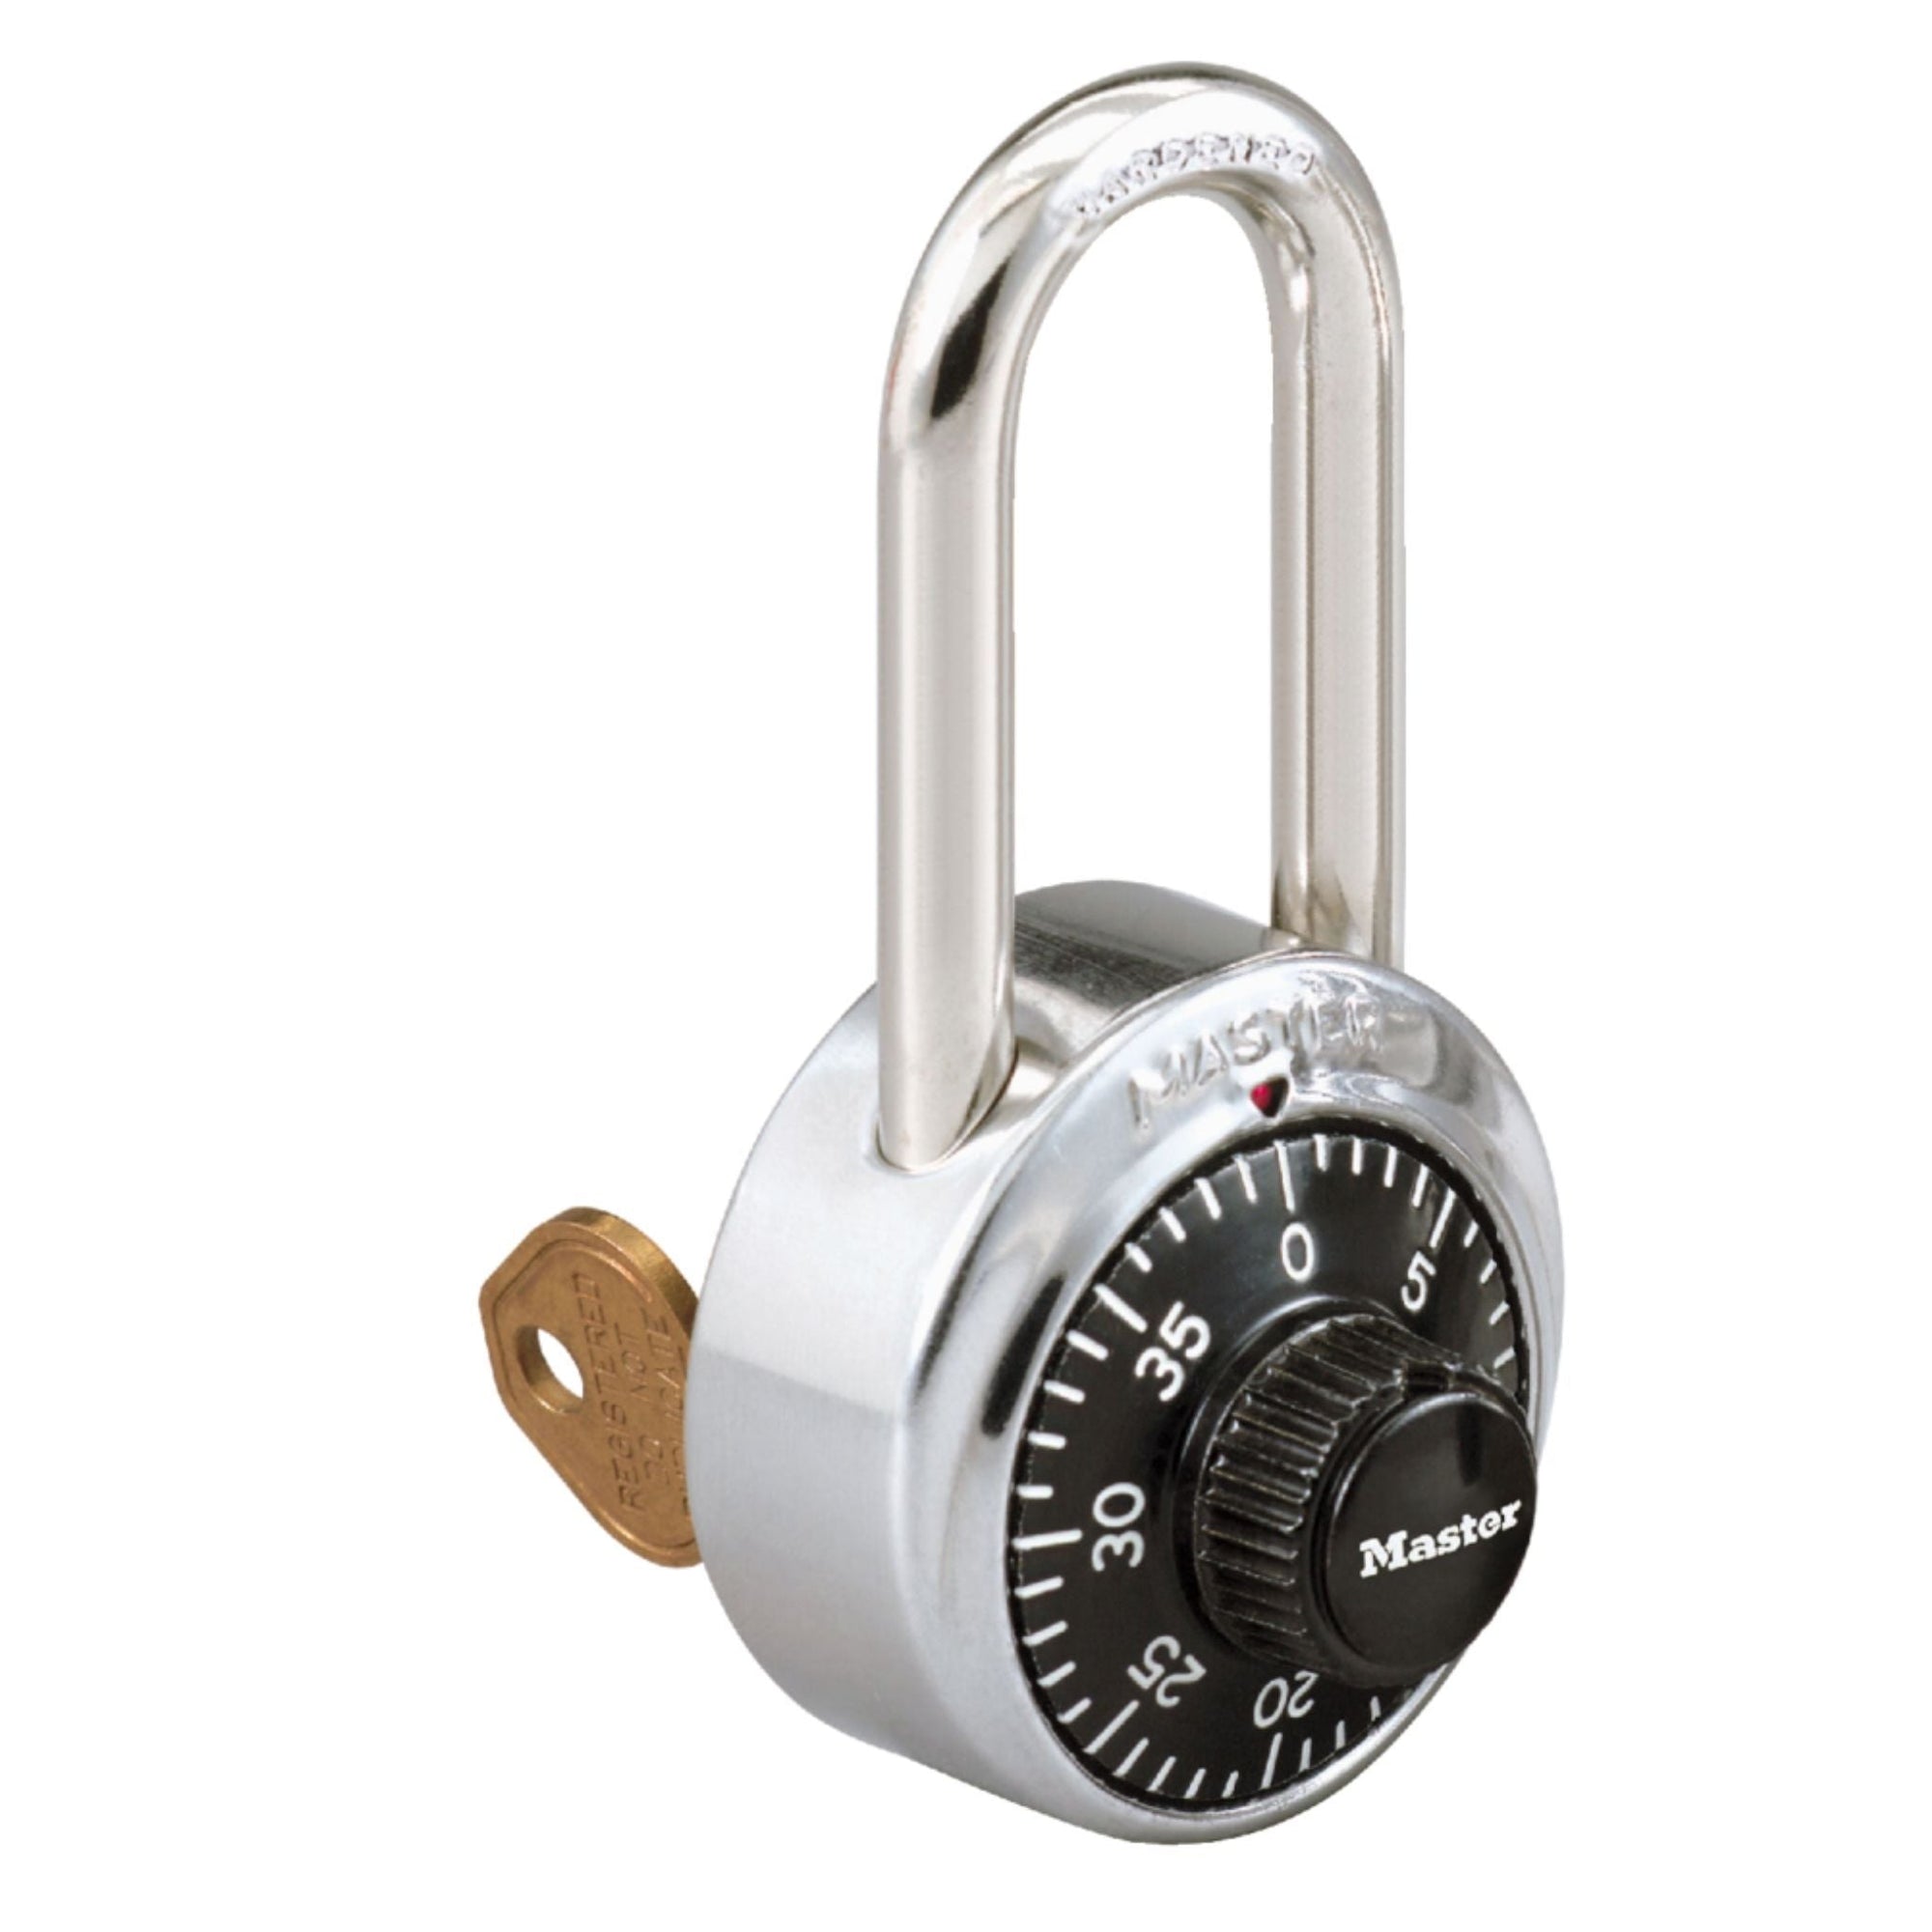 Master Lock 1525LF - Combination Padlock with Key Control